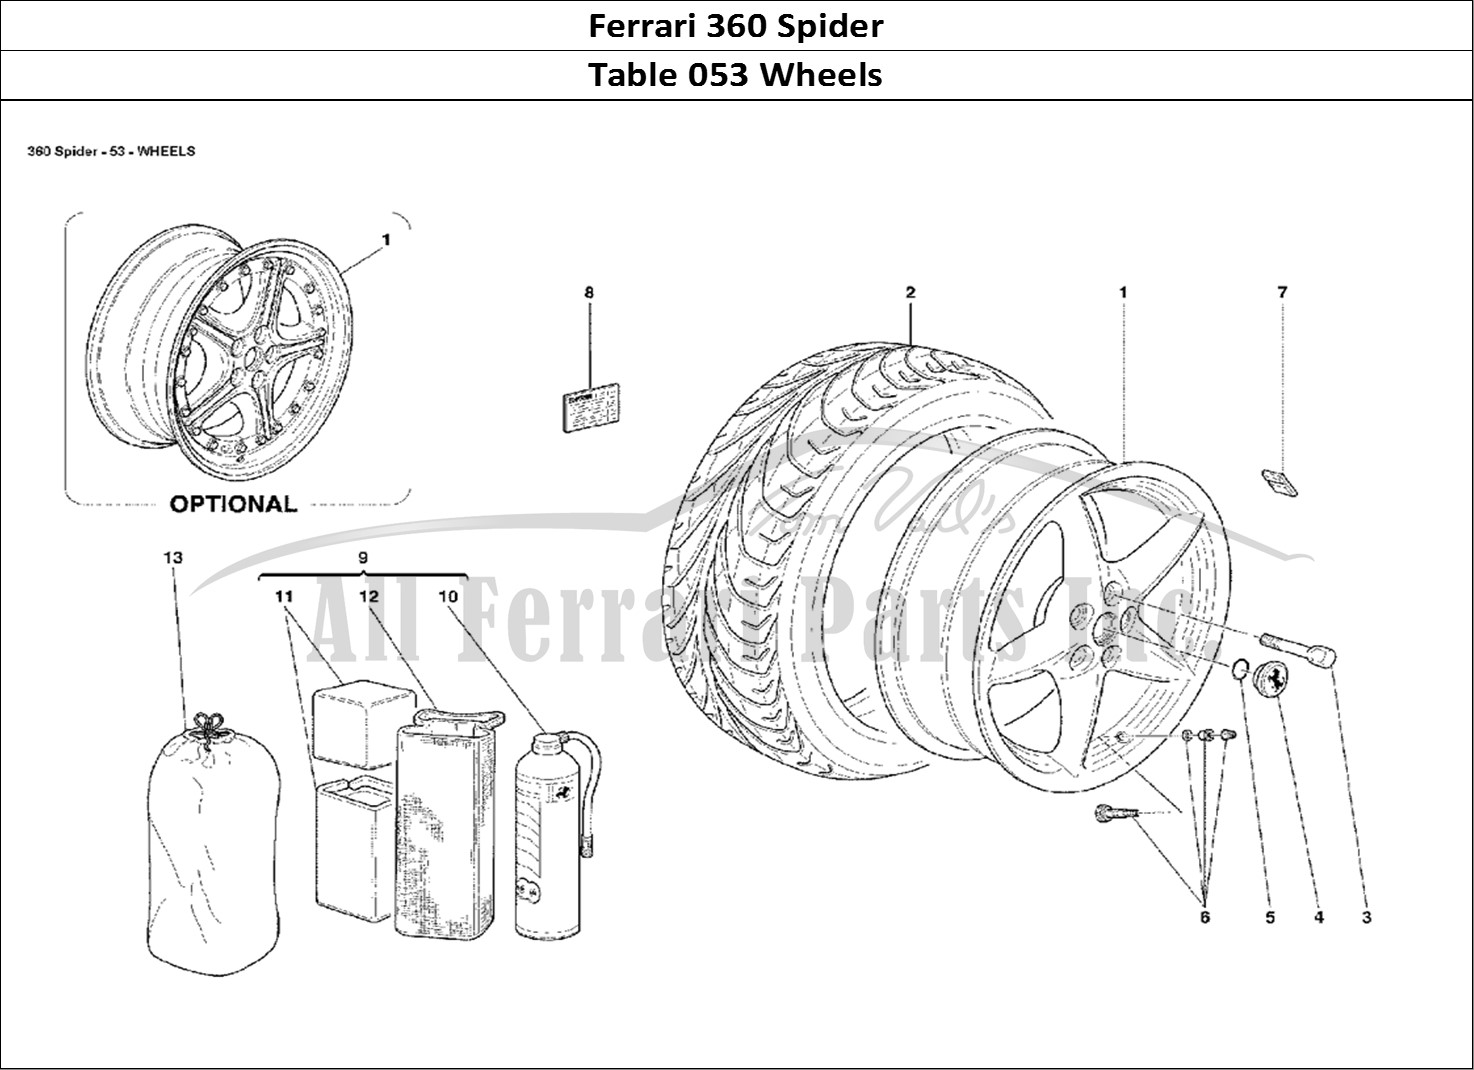 Ferrari Parts Ferrari 360 Spider Page 053 Wheels